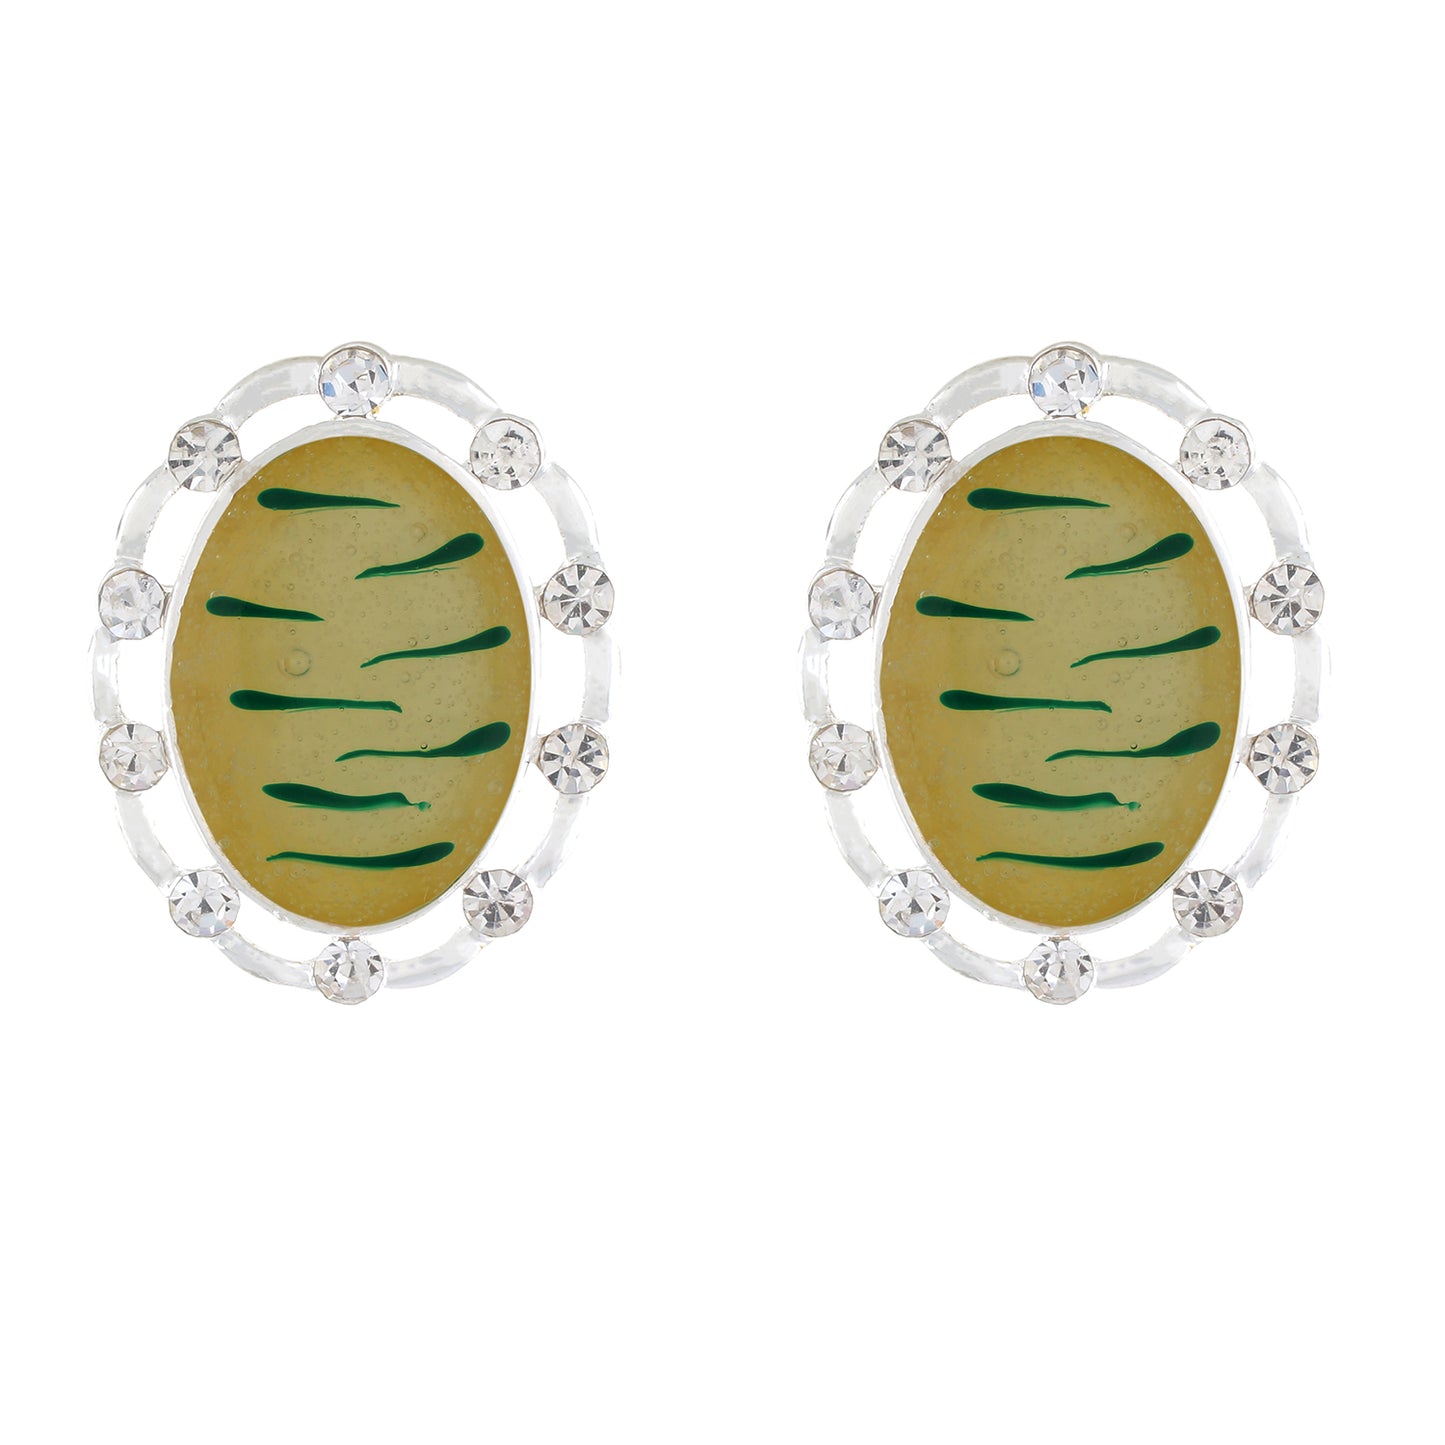 Cream colour Oval Design  Stud Earrings for Girls and Women